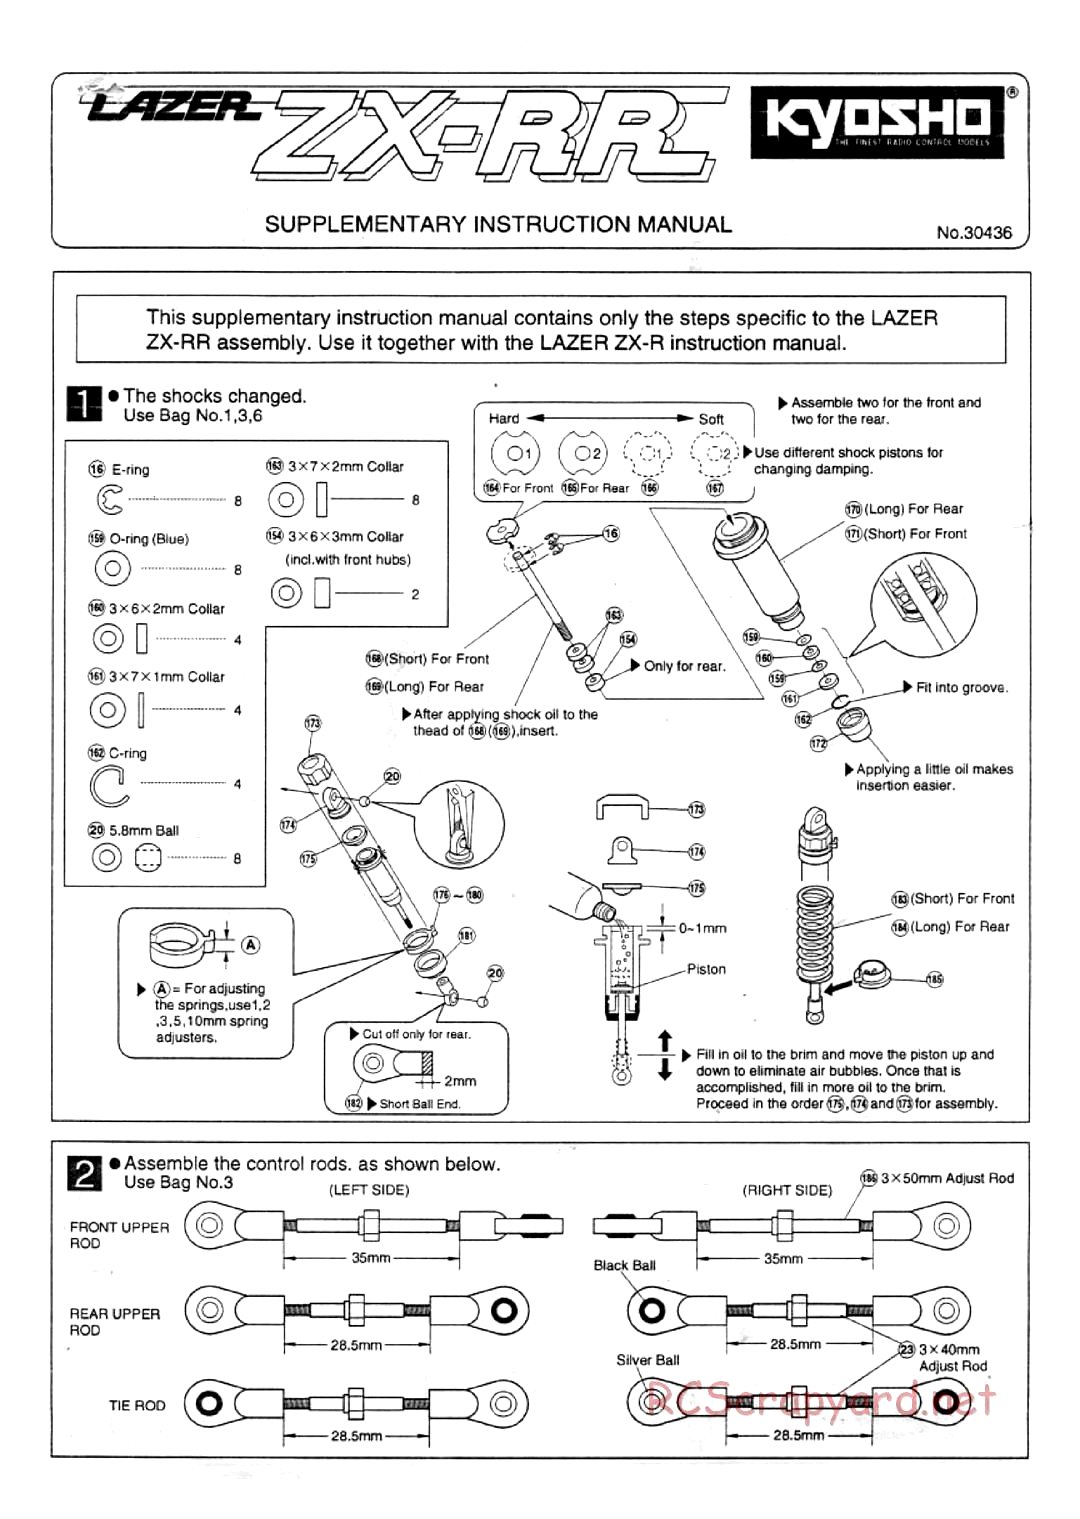 Kyosho - Lazer ZX-RR - Manual - Page 1